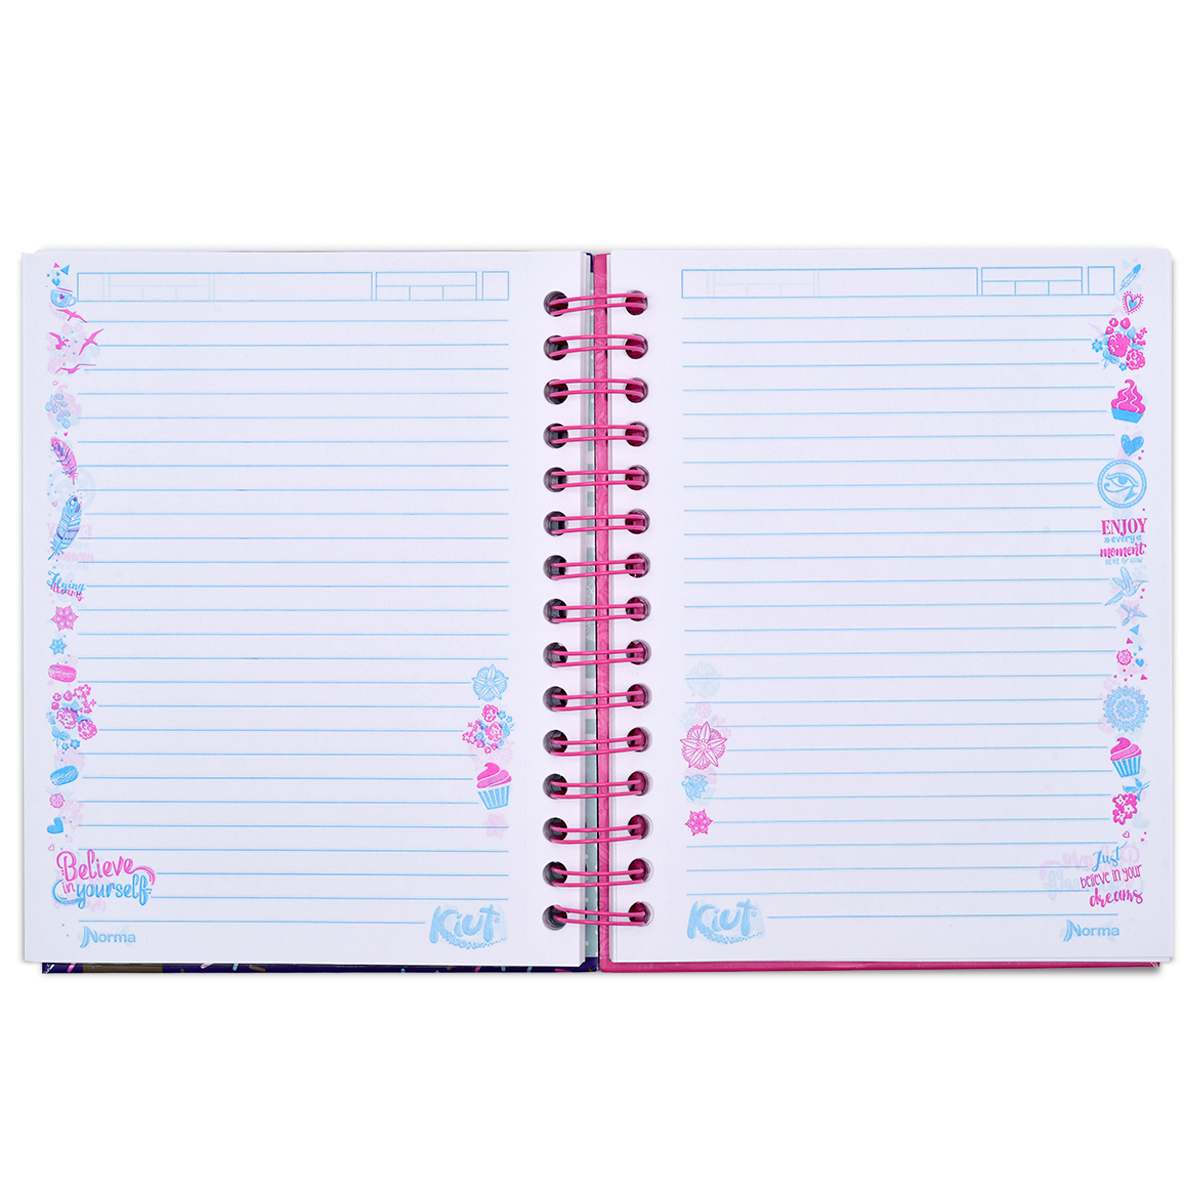 Cuaderno Forma Francesa Norma Kiut Love Raya 160 hojas | Office Depot Mexico